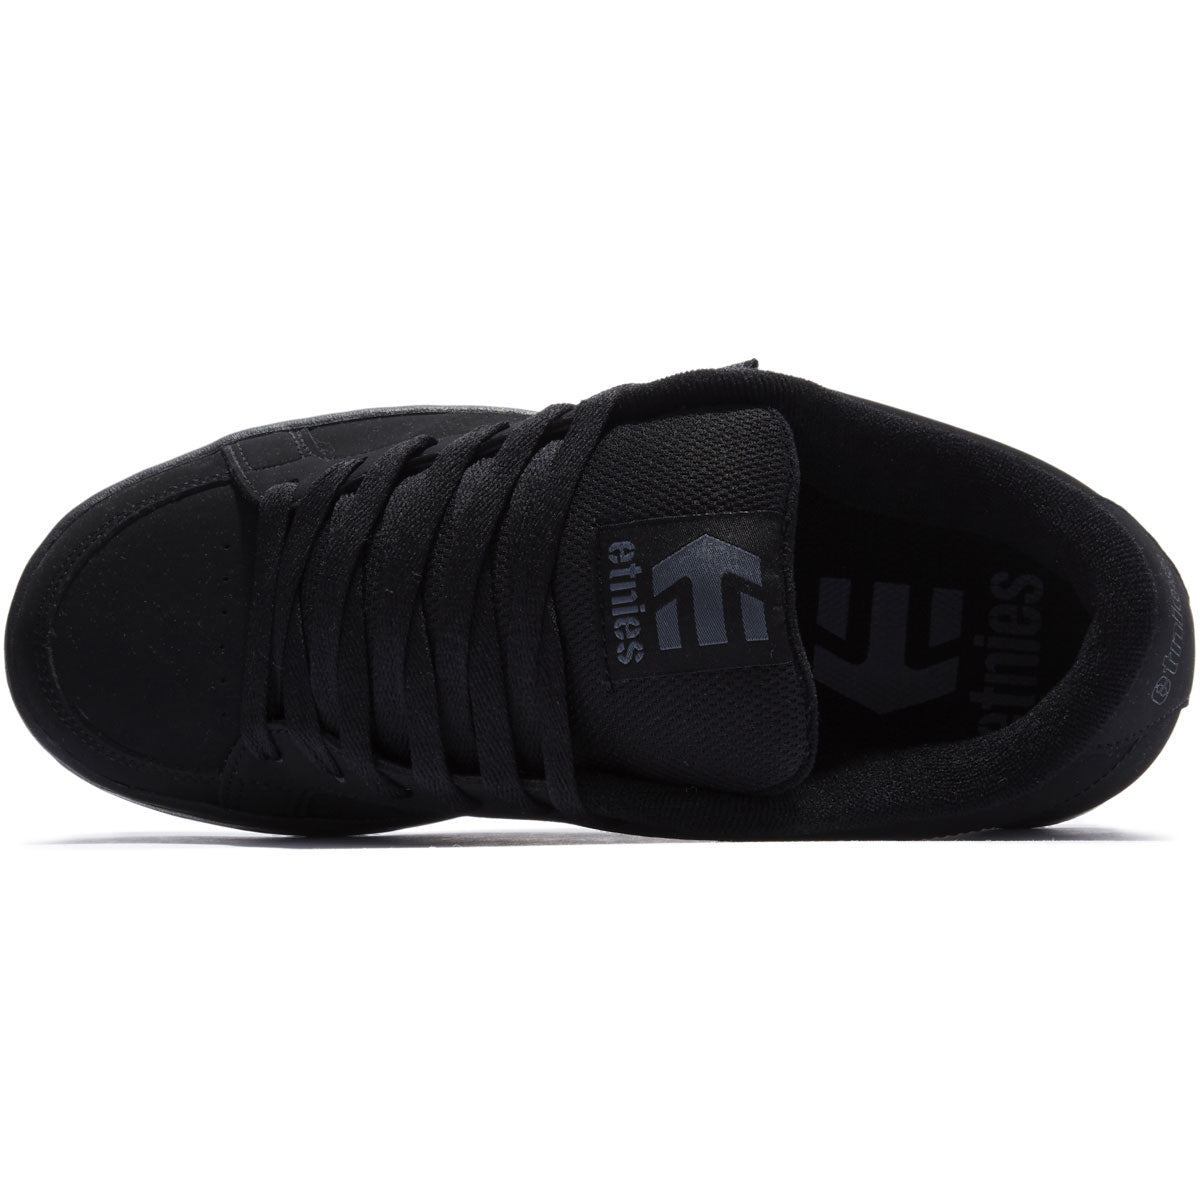 Etnies Kingpin Shoes - Black/Black image 3